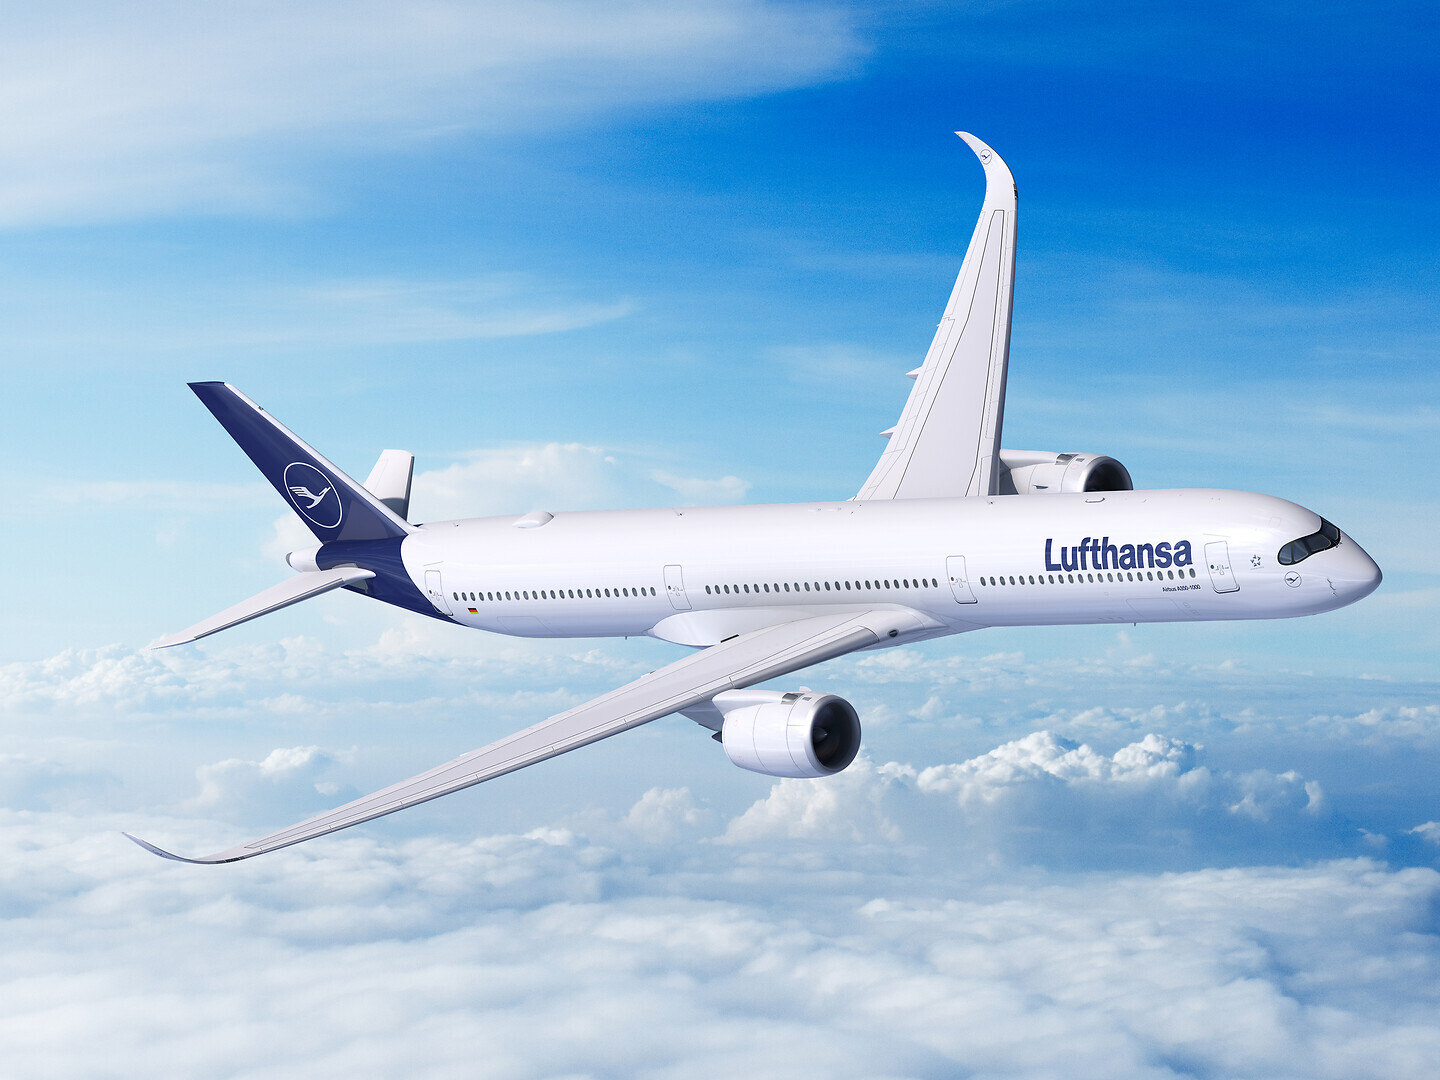 Lufthansa: encomenda de 10 Airbus A350-1000s e 5 Airbus A350-900s